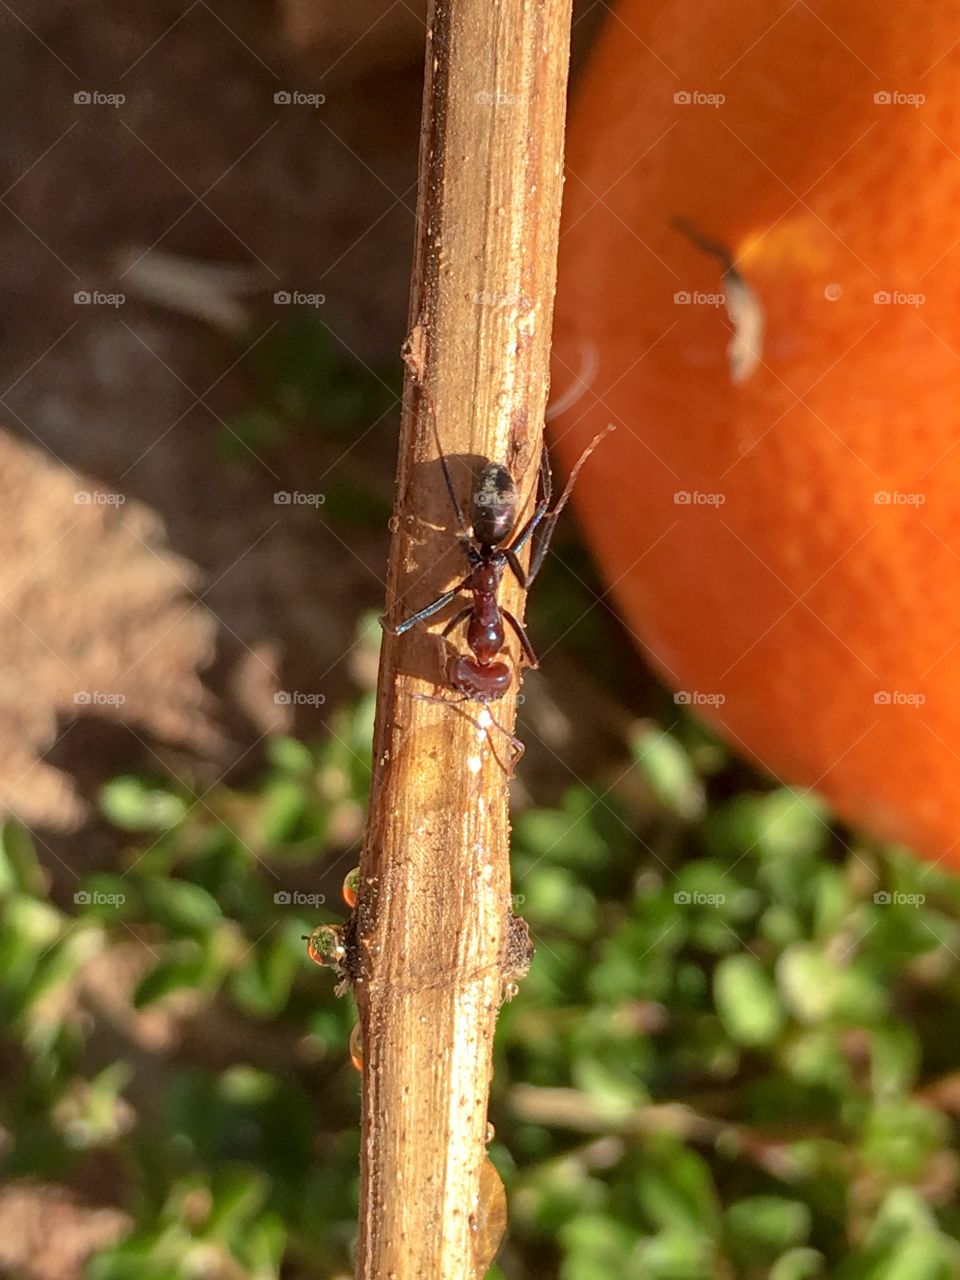 Single worker ant on branch, blurred orange in background 